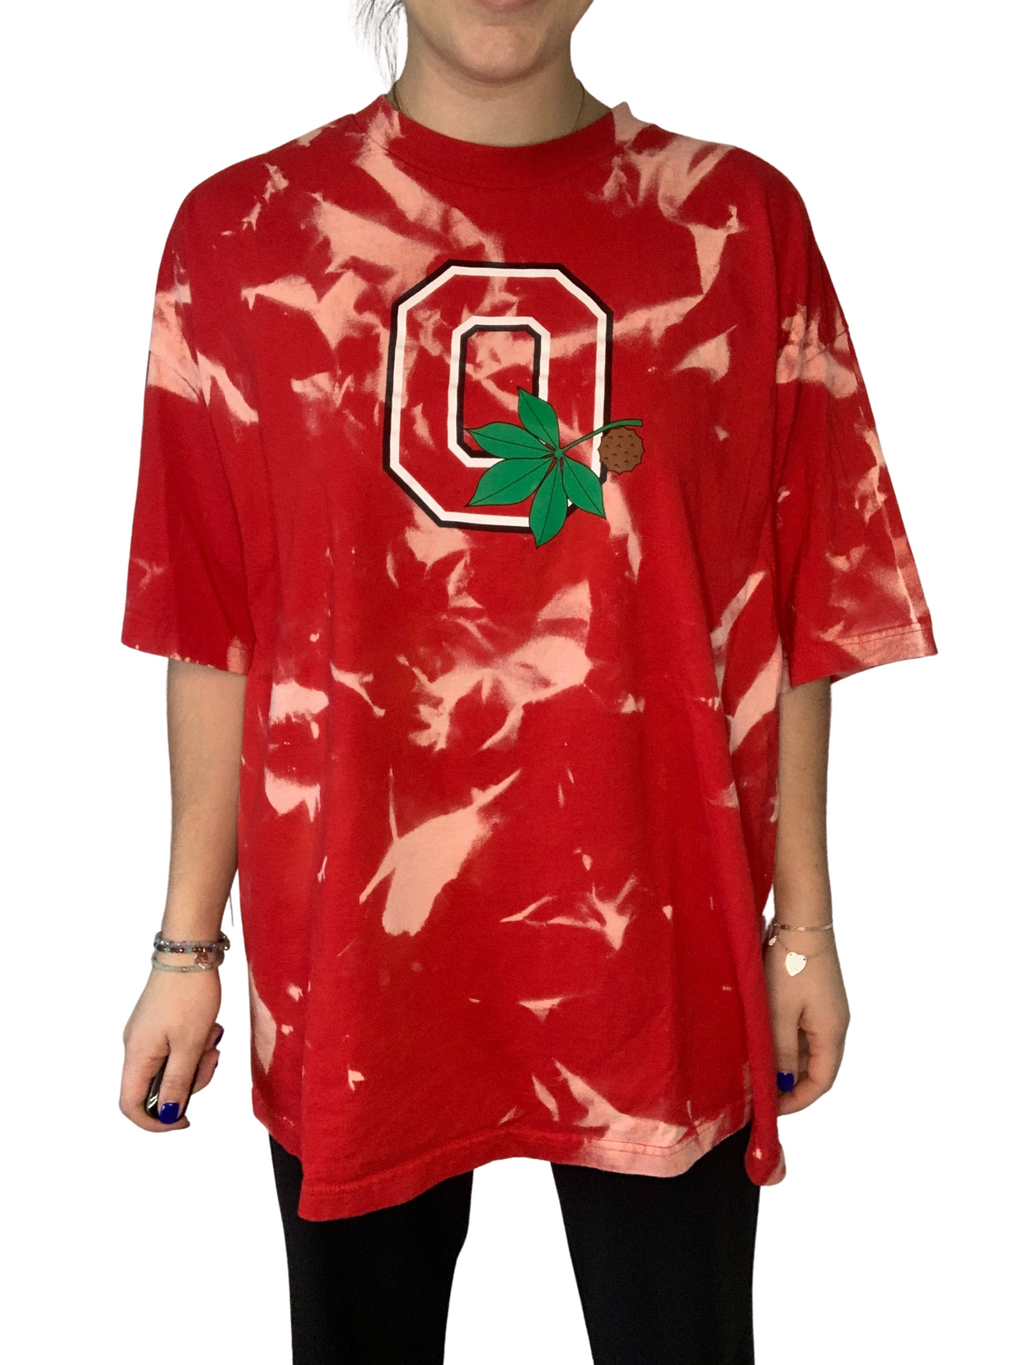 Ohio State University Bleached Shirt